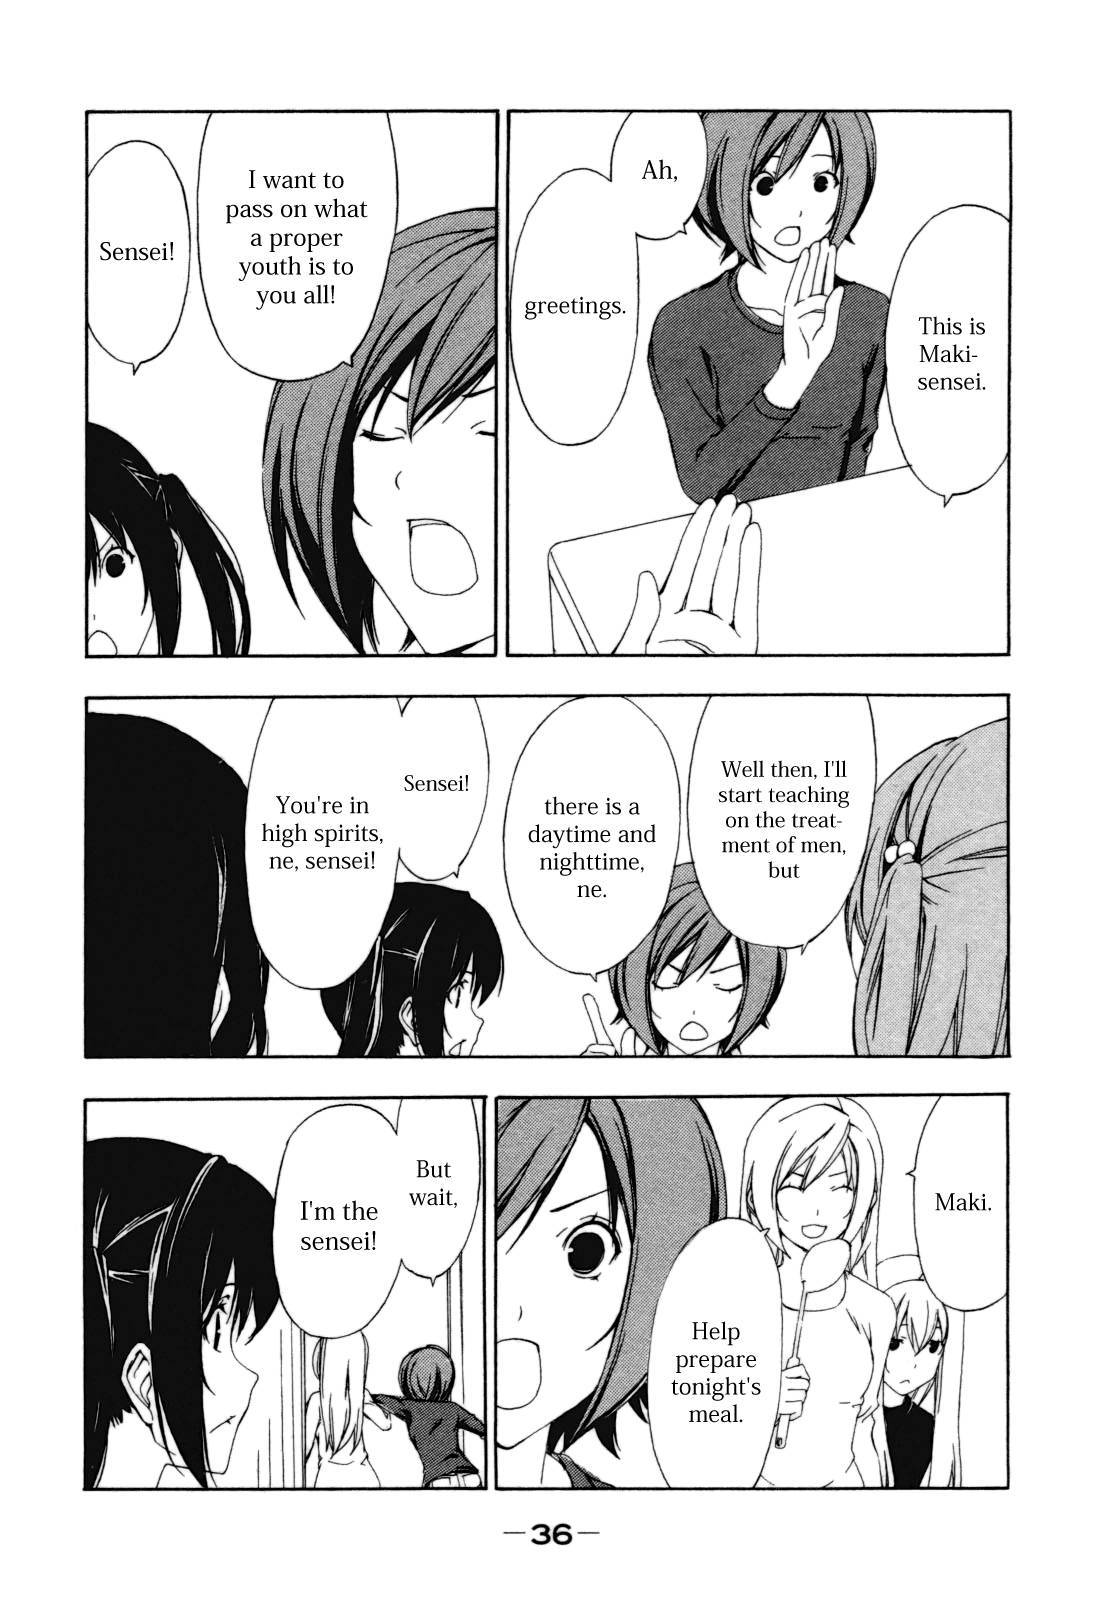 Minami-ke chapter 105 page 3